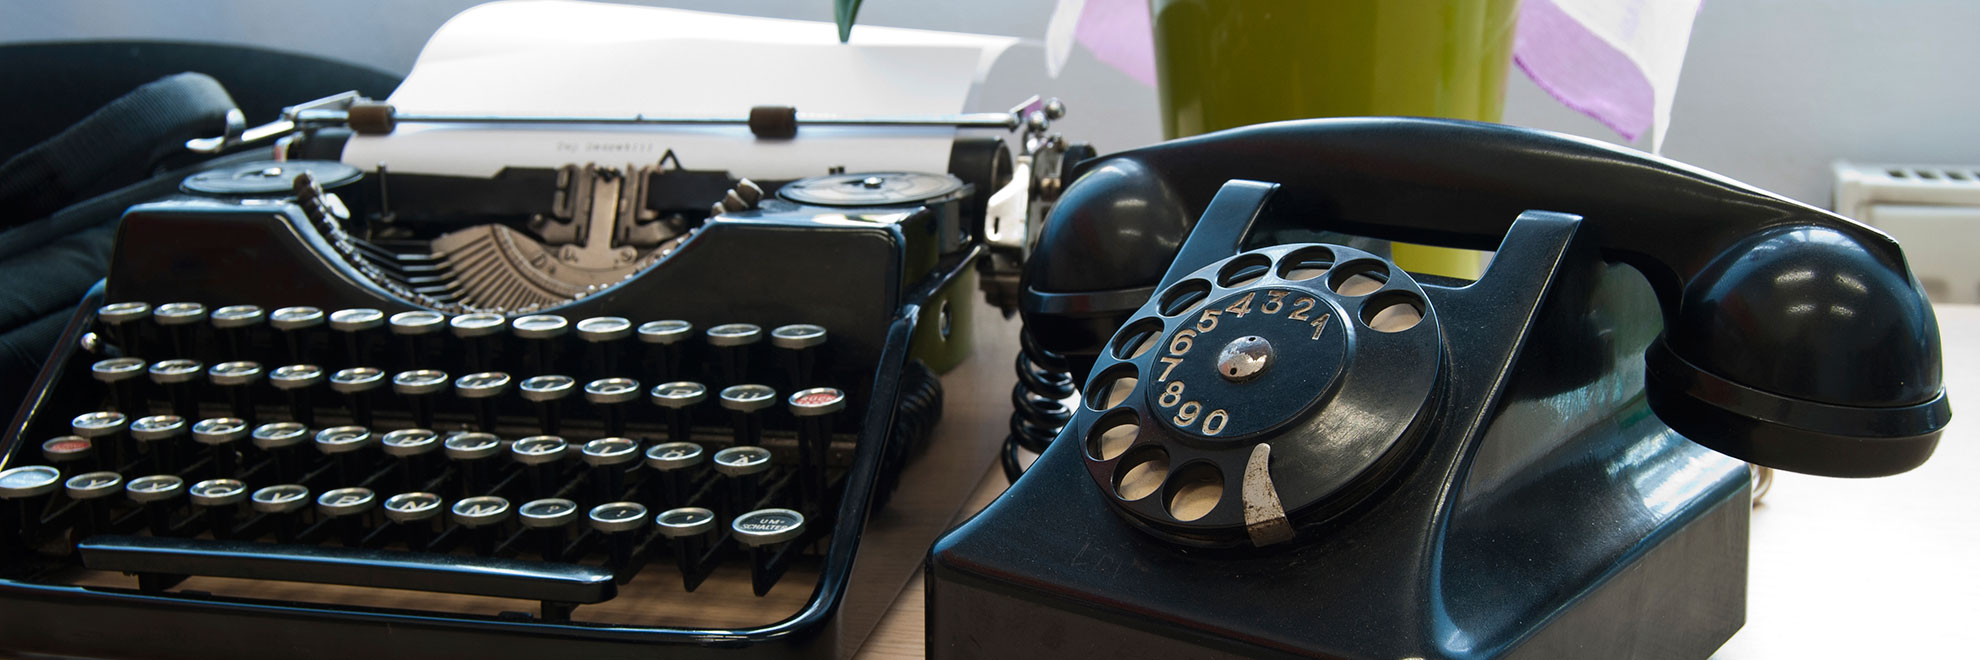 typewriter and phone